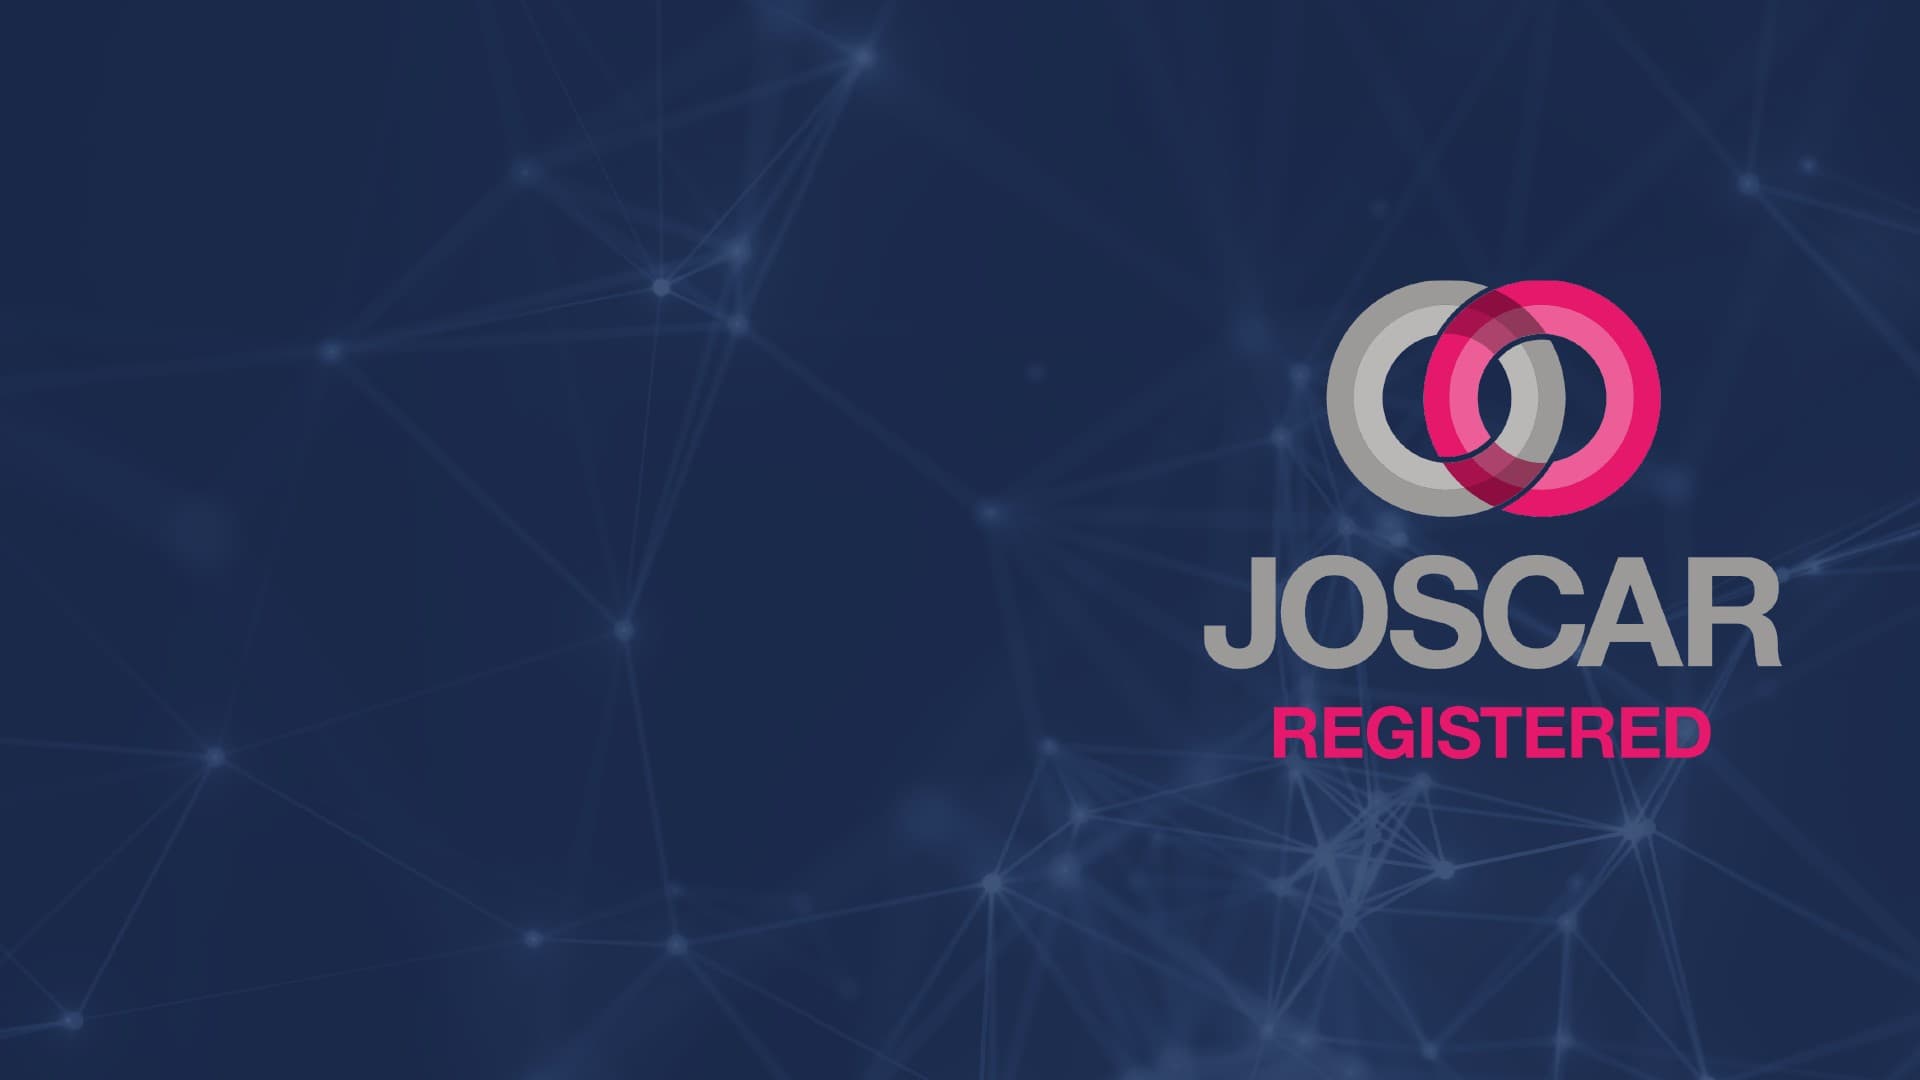 Cloudscaler is registered on JOSCAR